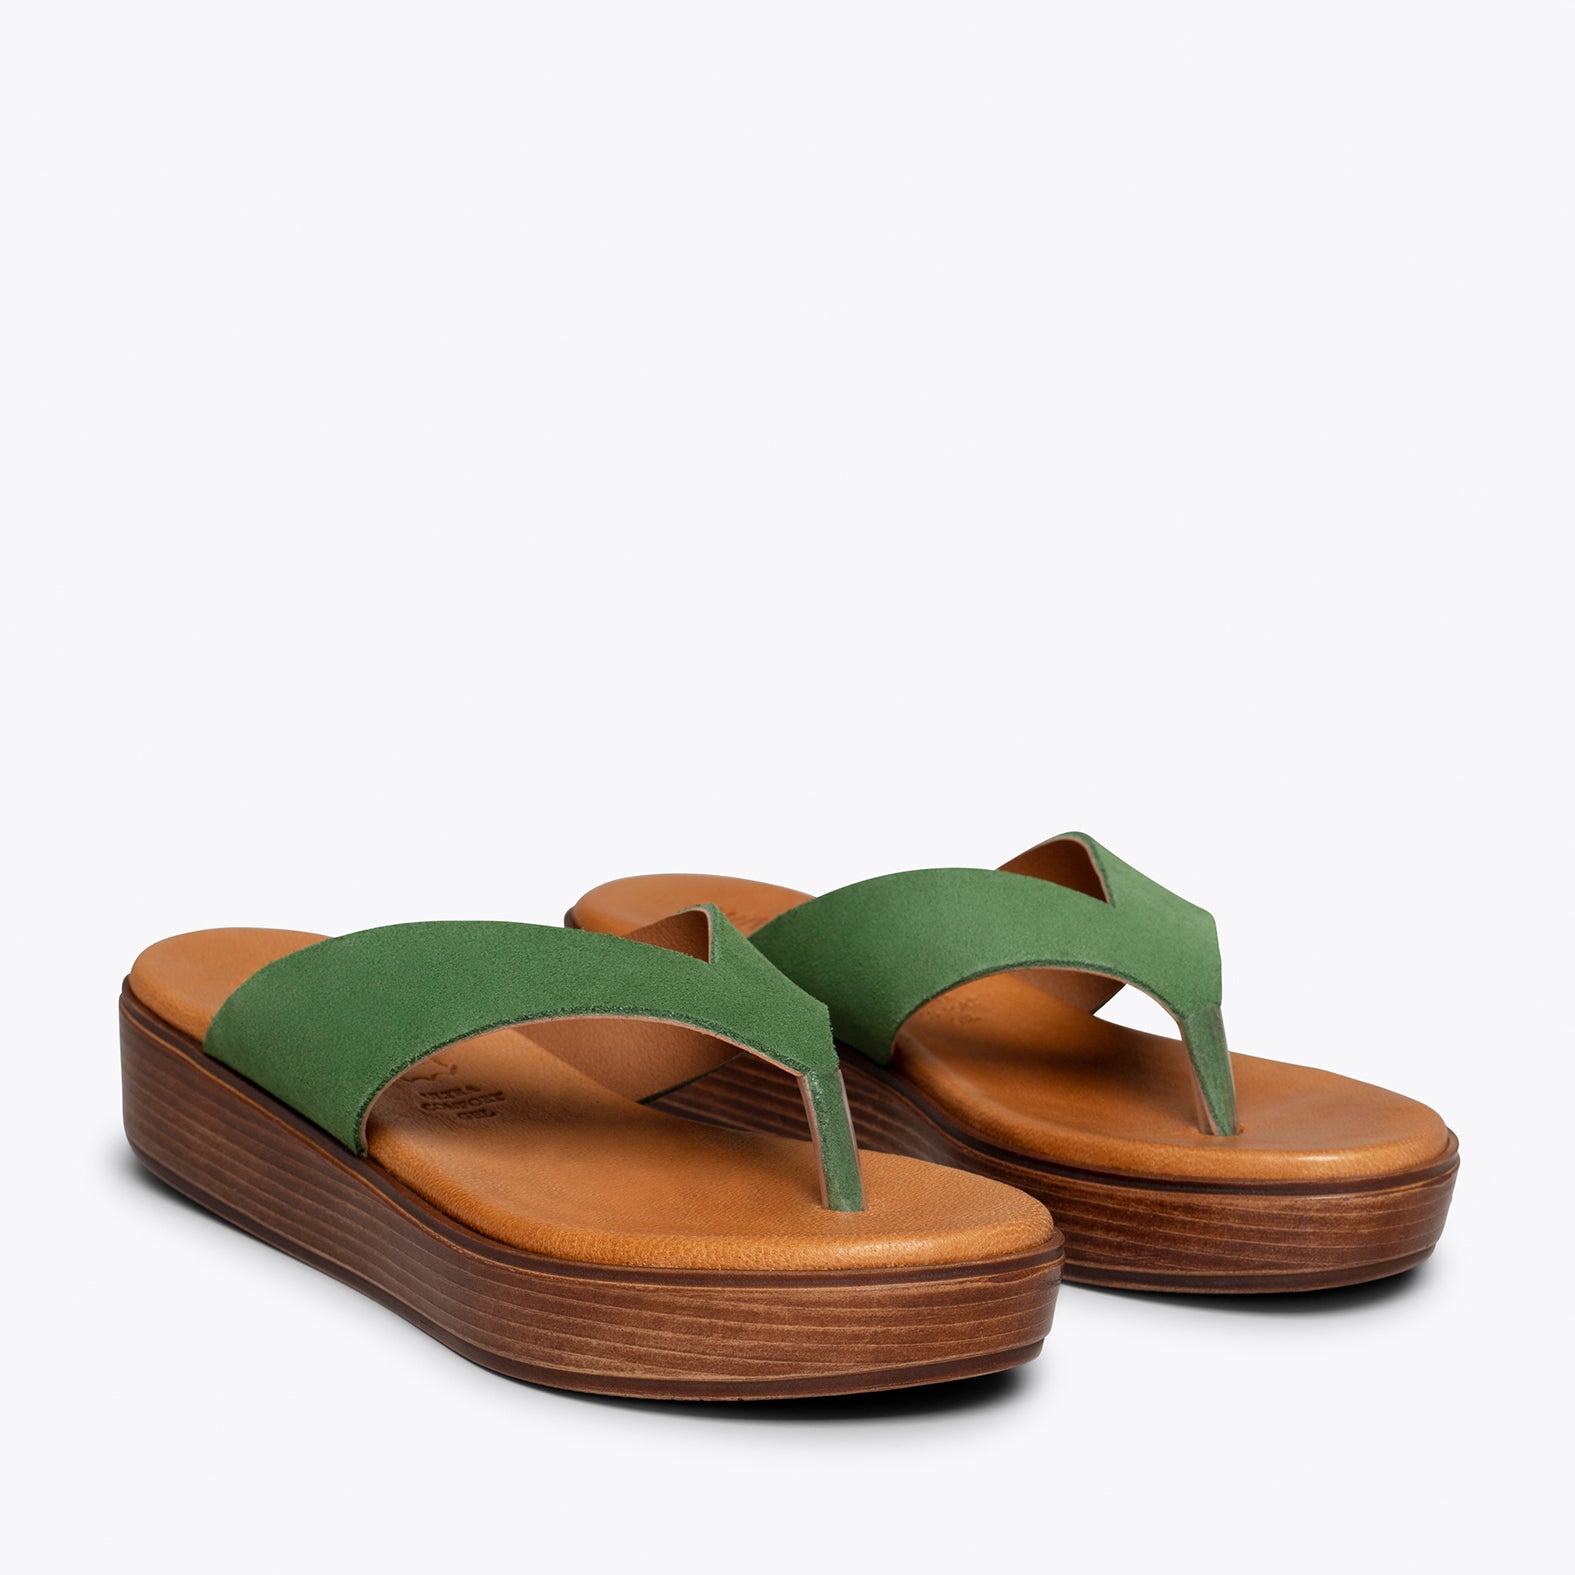 BASIC – GREEN leather flip flops